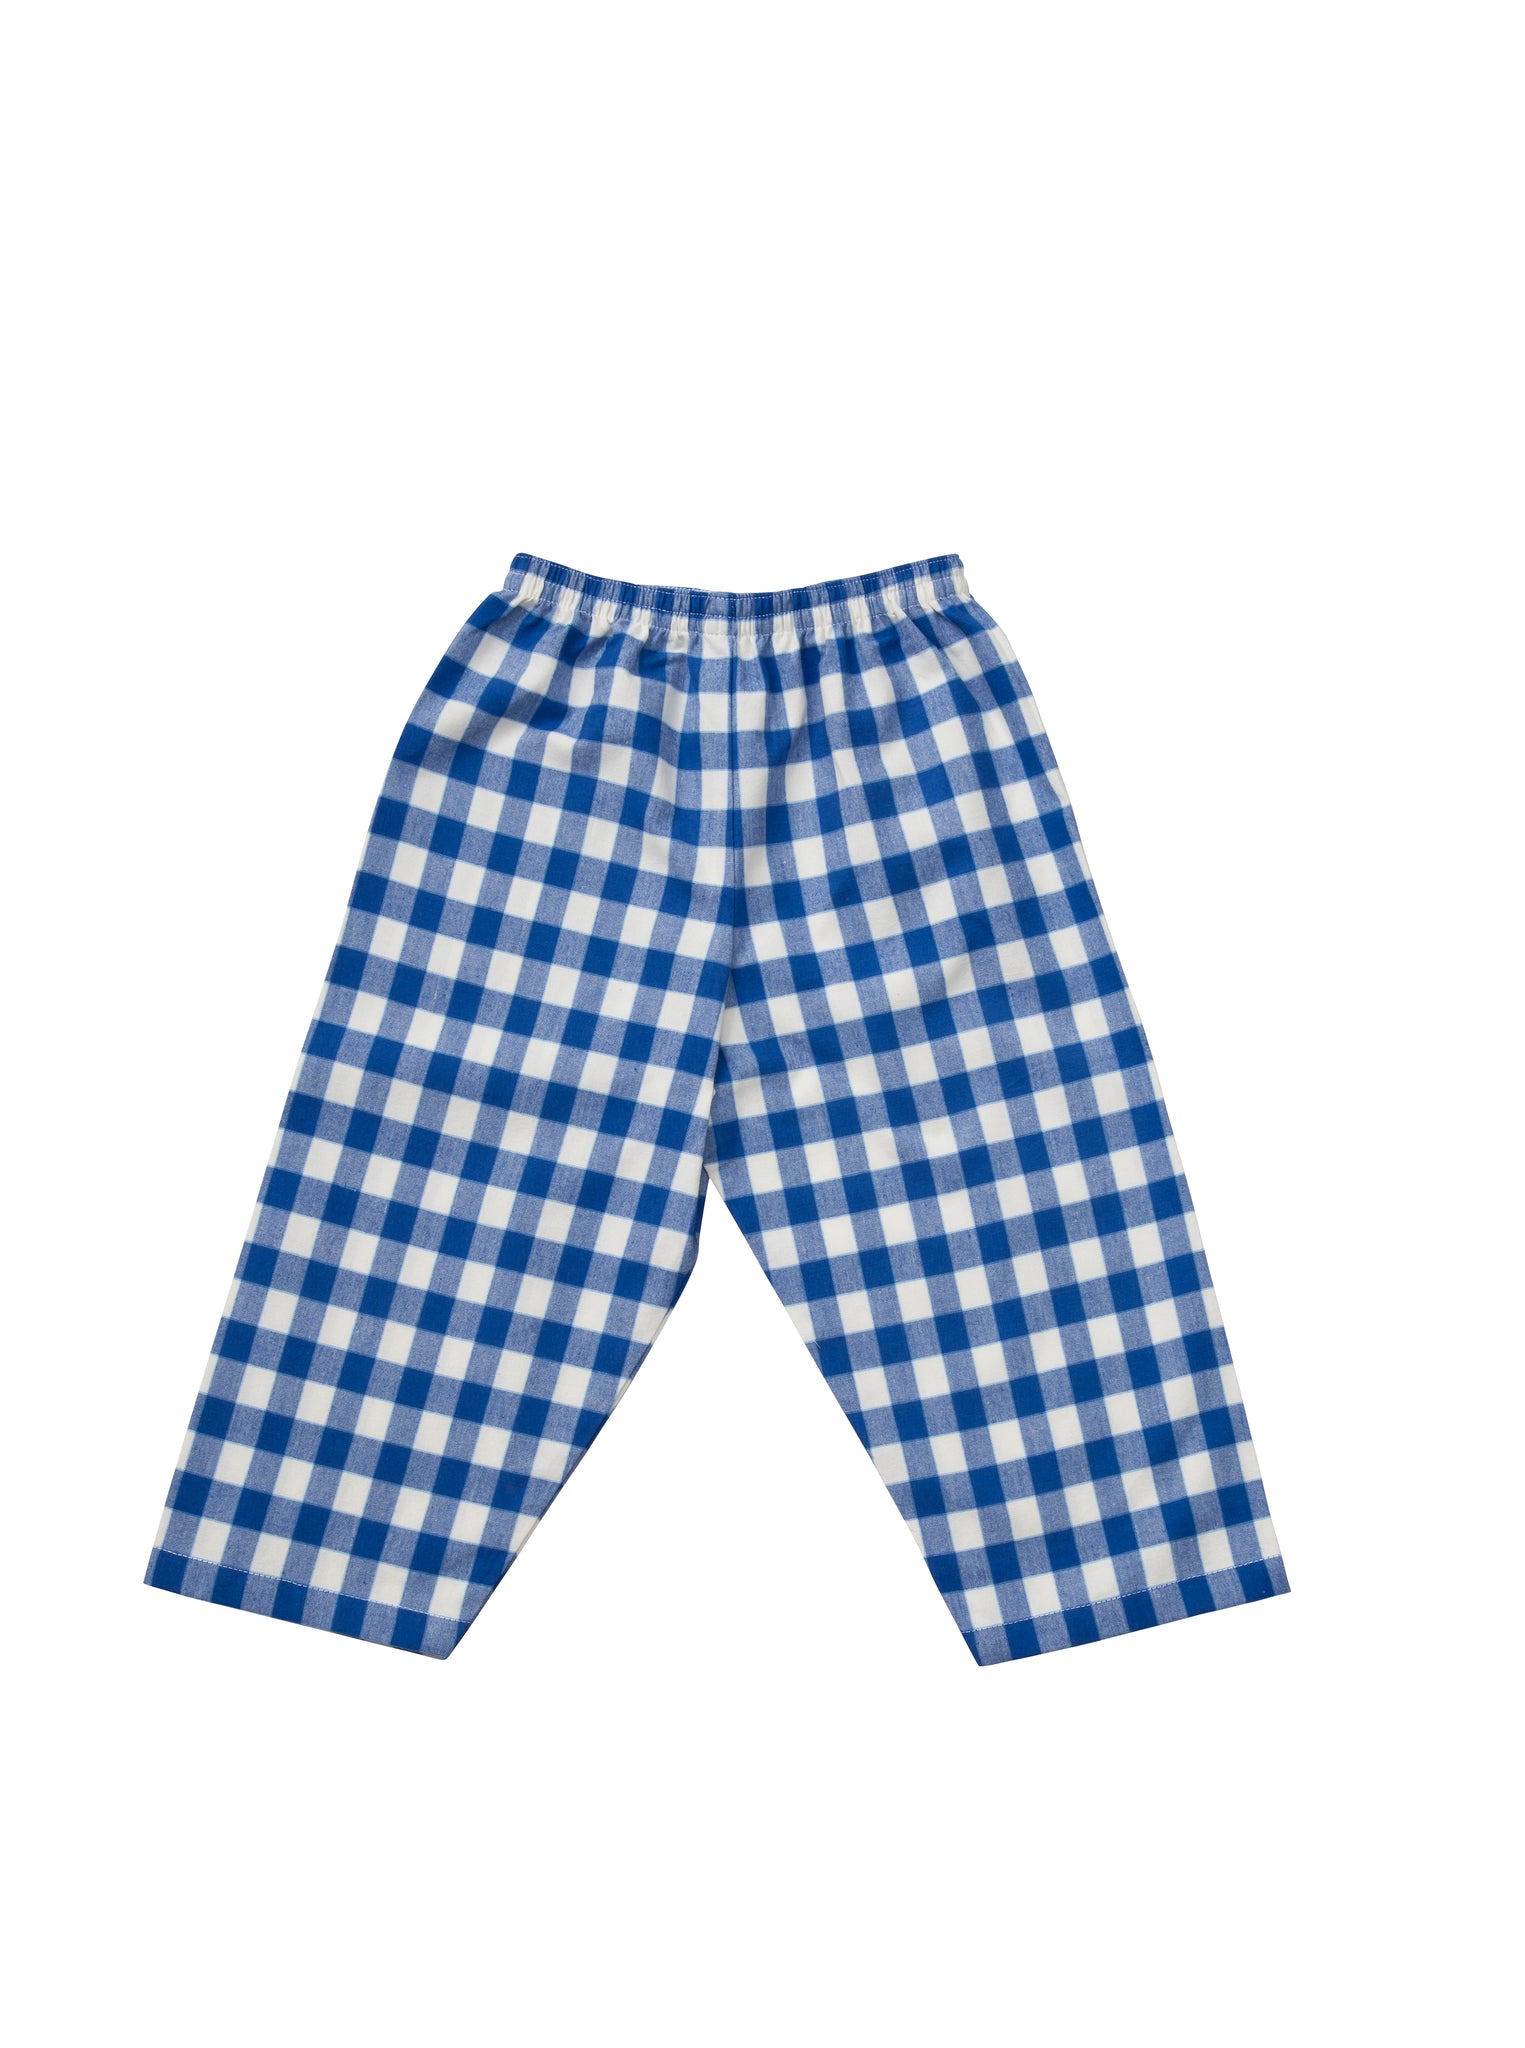 Blue check children's cotton pyjama set from Turquaz.